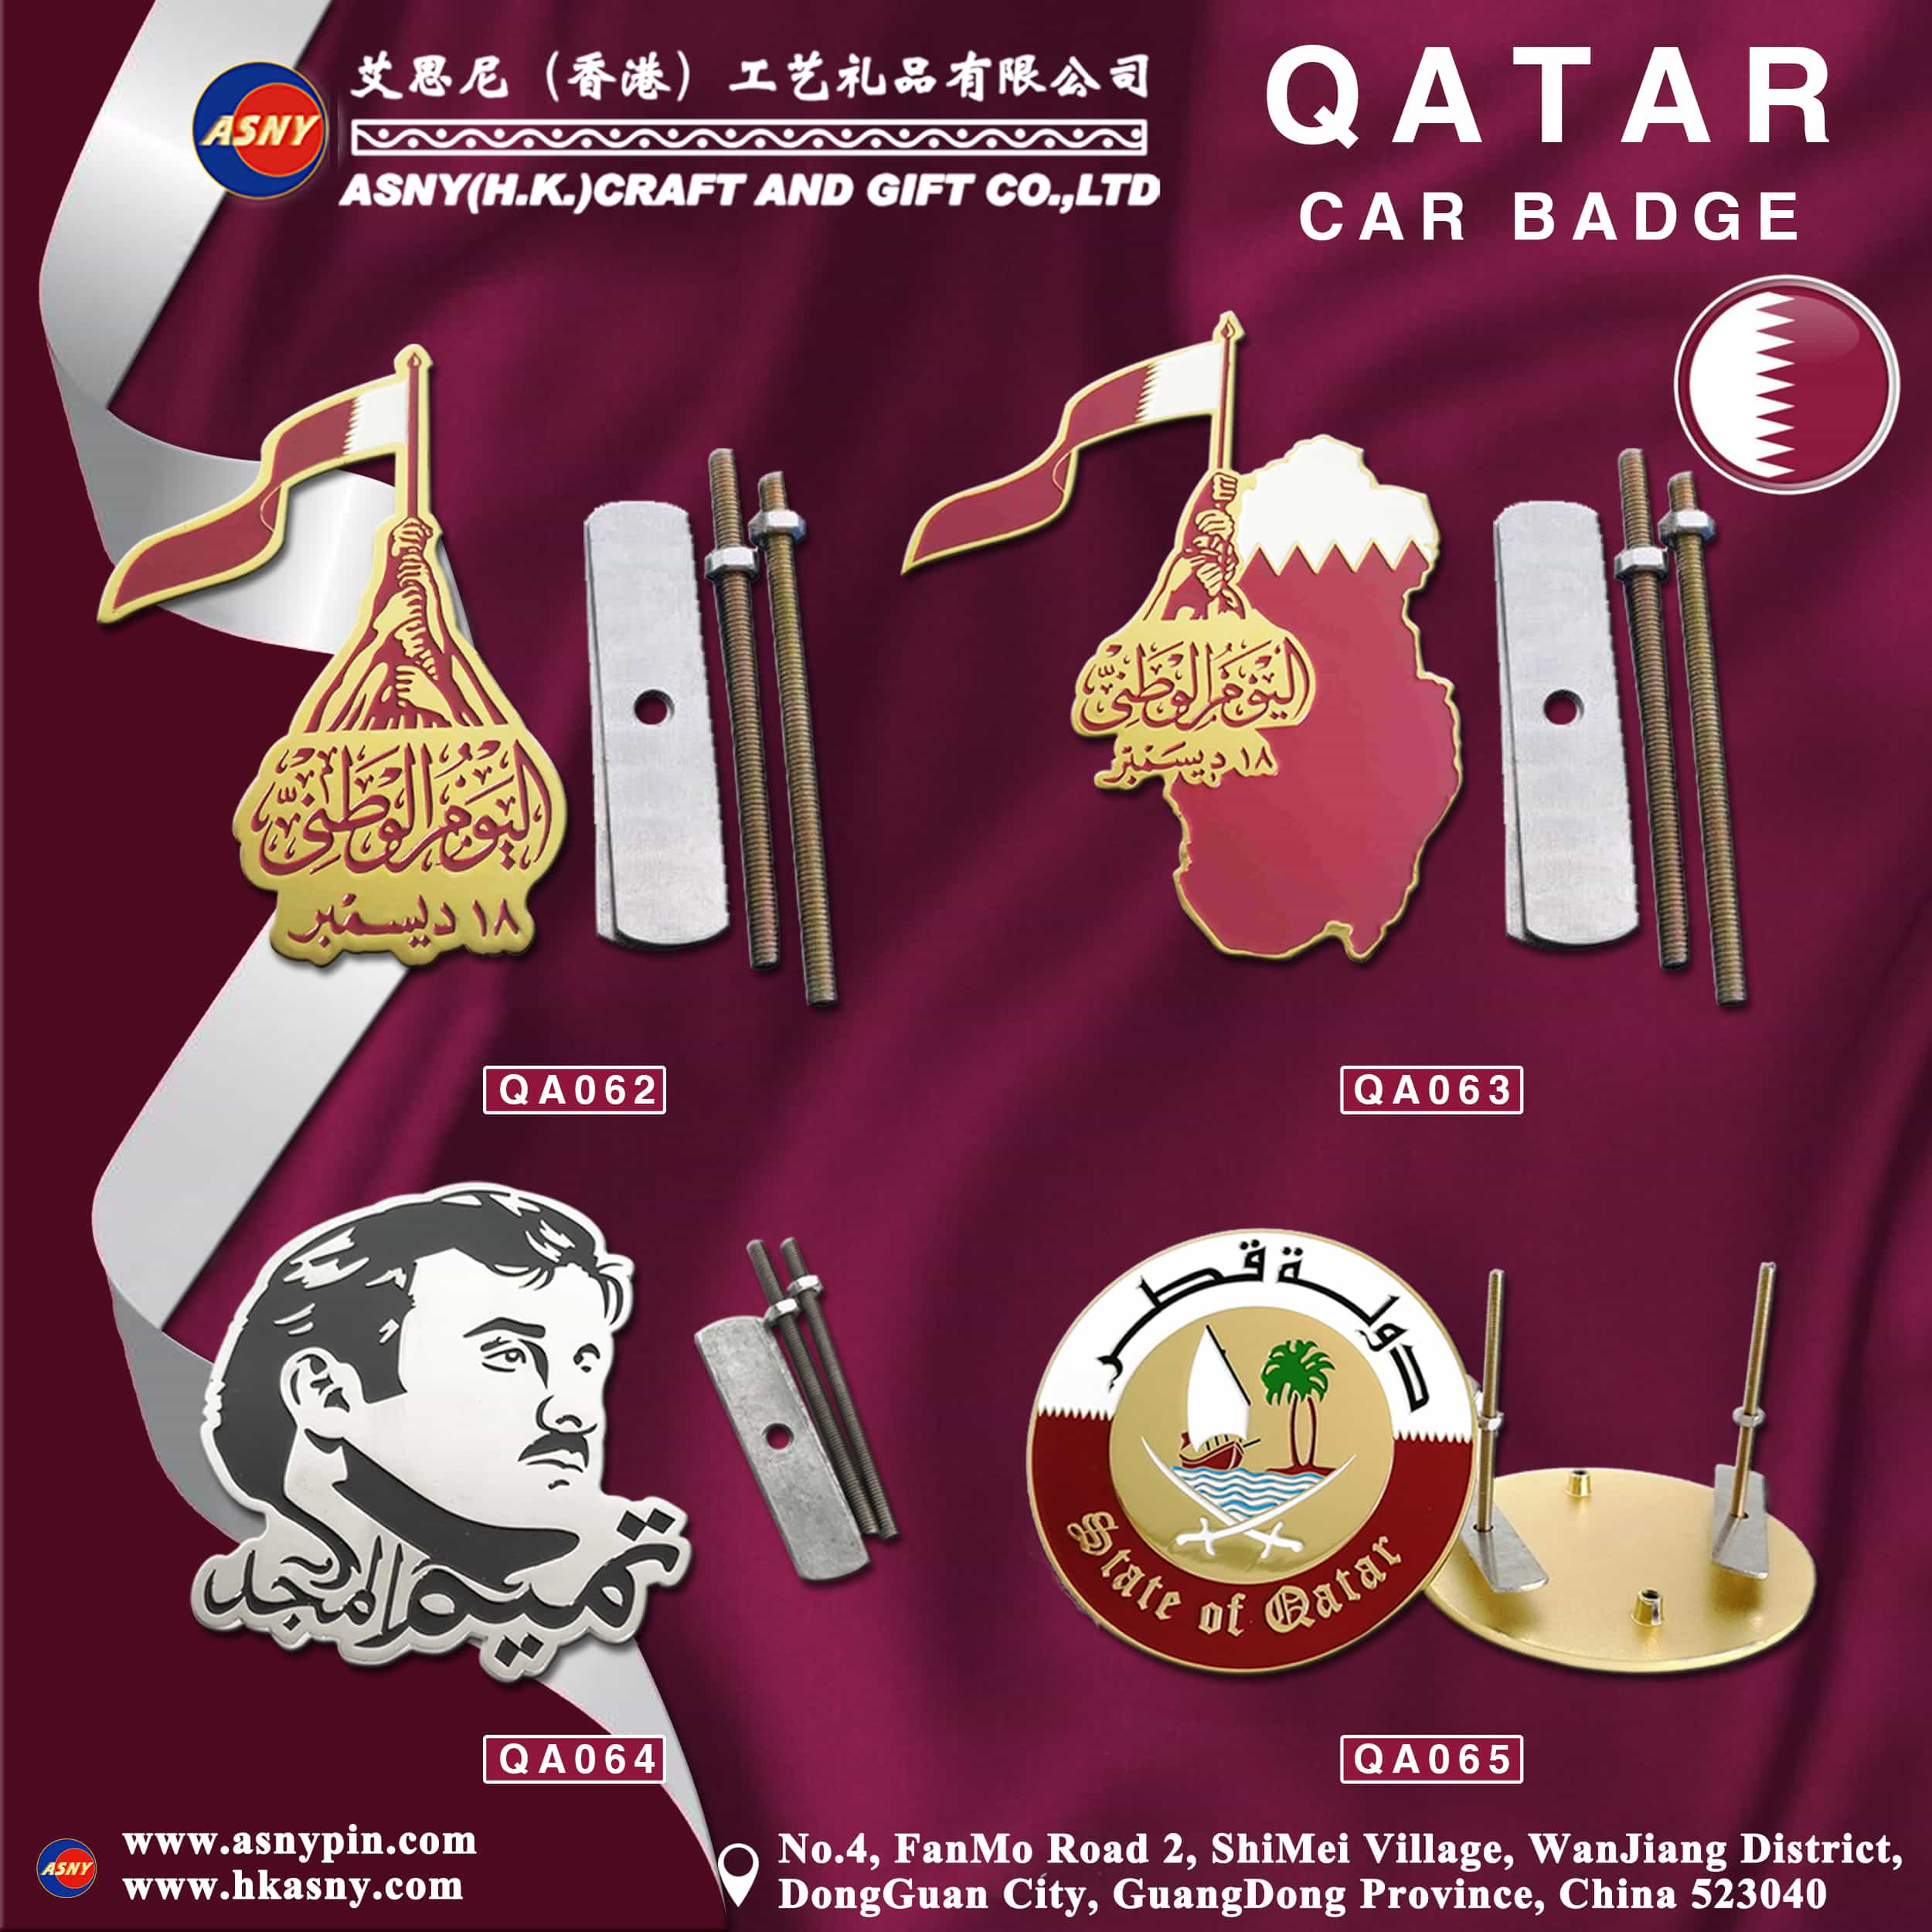 Catalog-Qatar-Car-Badge-Price-Design-Customization-Production-Maker-Supply-Factory